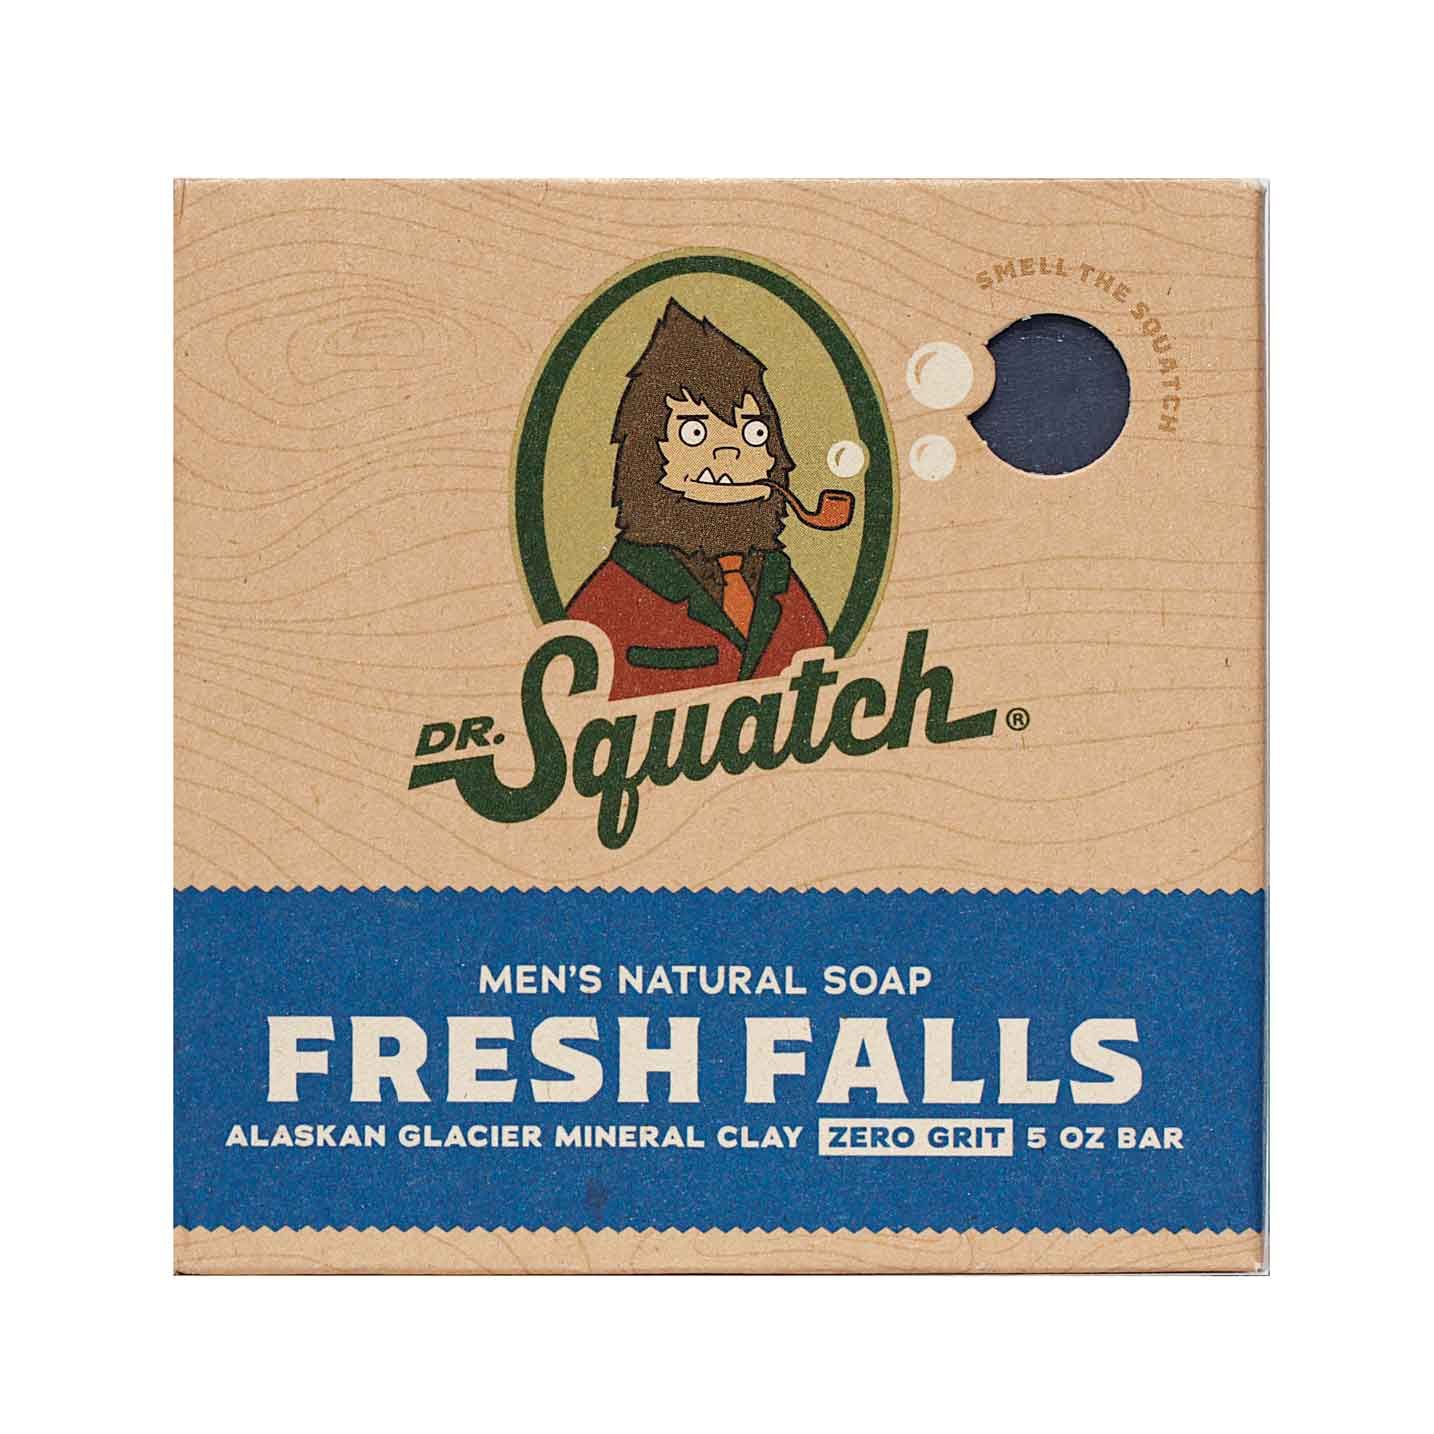 Squatch soap